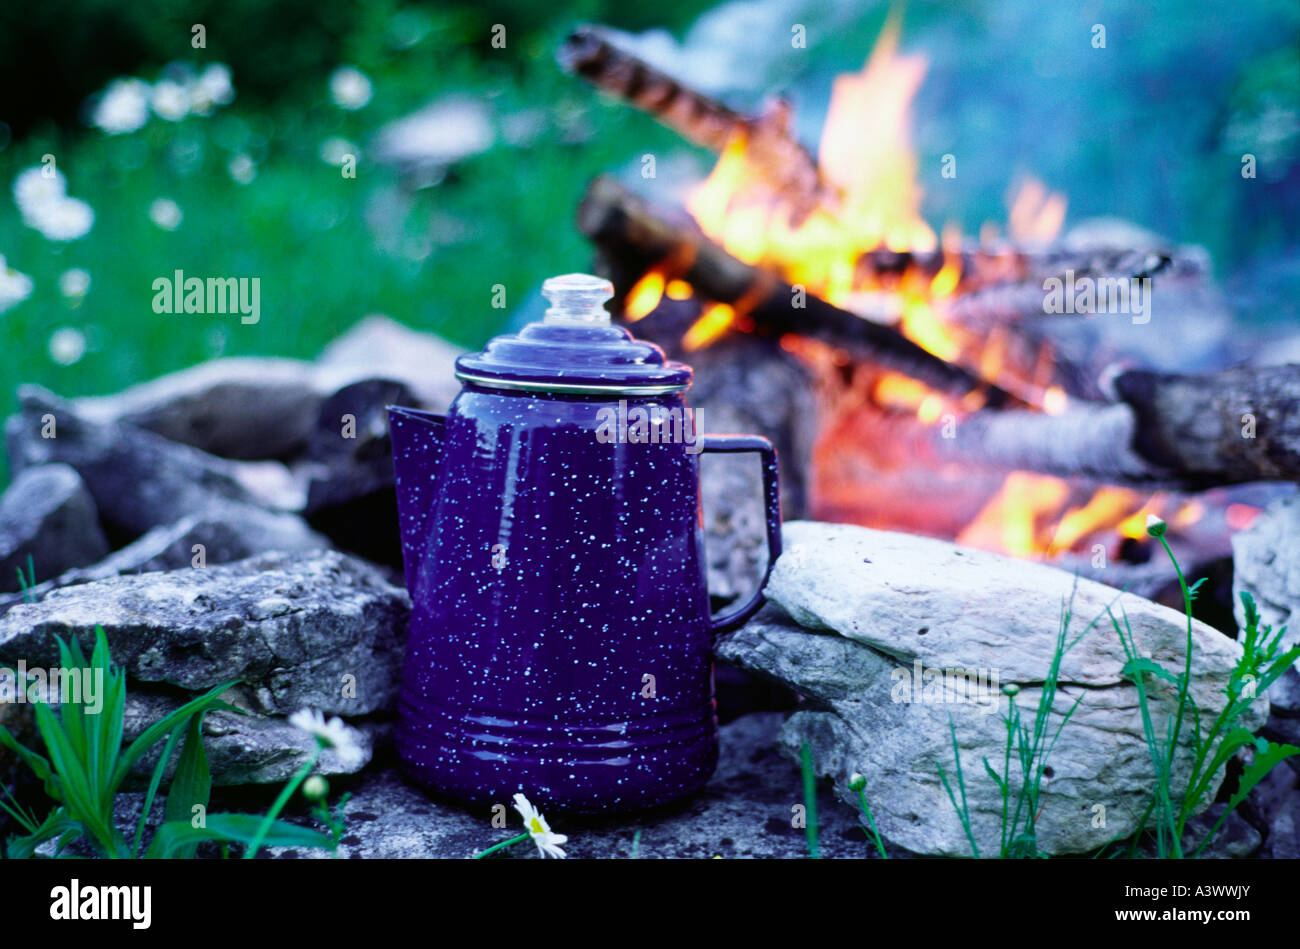 https://c8.alamy.com/comp/A3WWJY/blue-enamel-coffee-pot-heating-on-campfire-in-wild-flower-meadow-A3WWJY.jpg